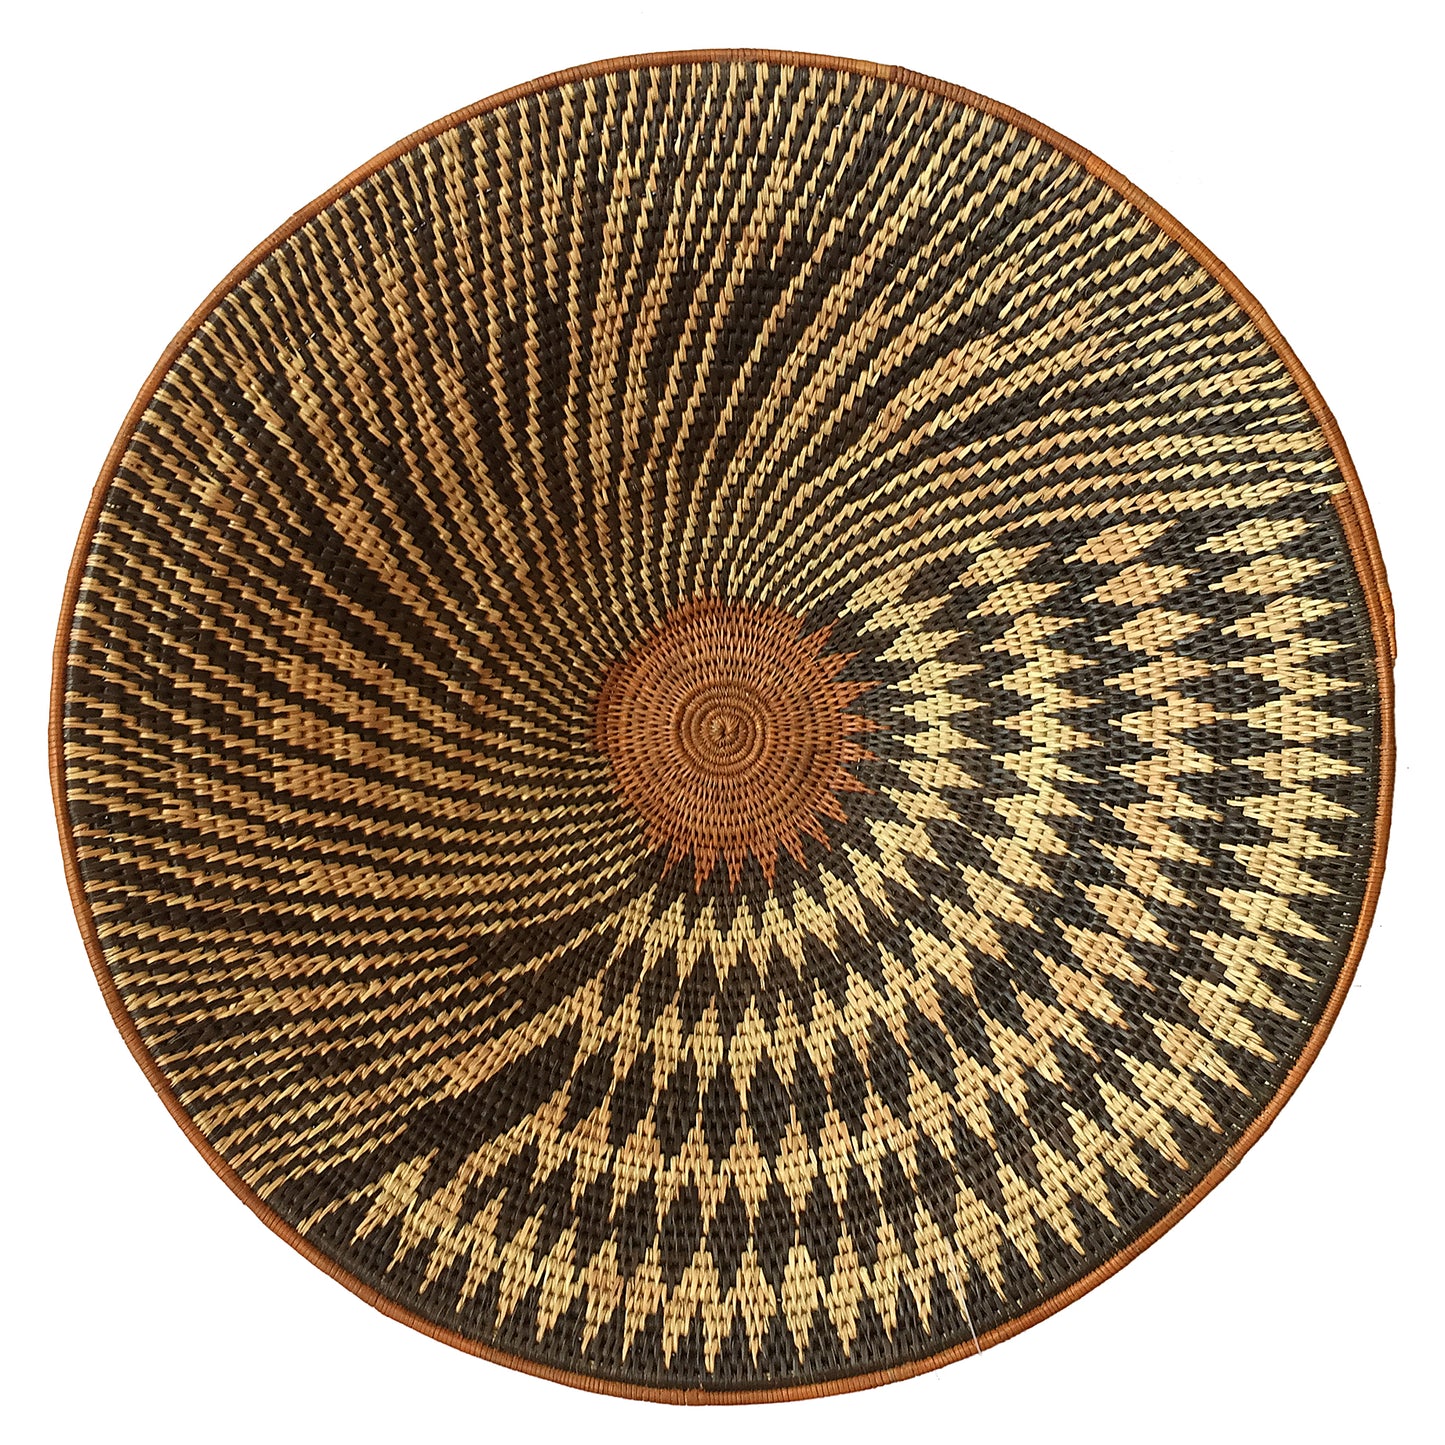 Namibia, Omba Art Trust, Basket Weaving